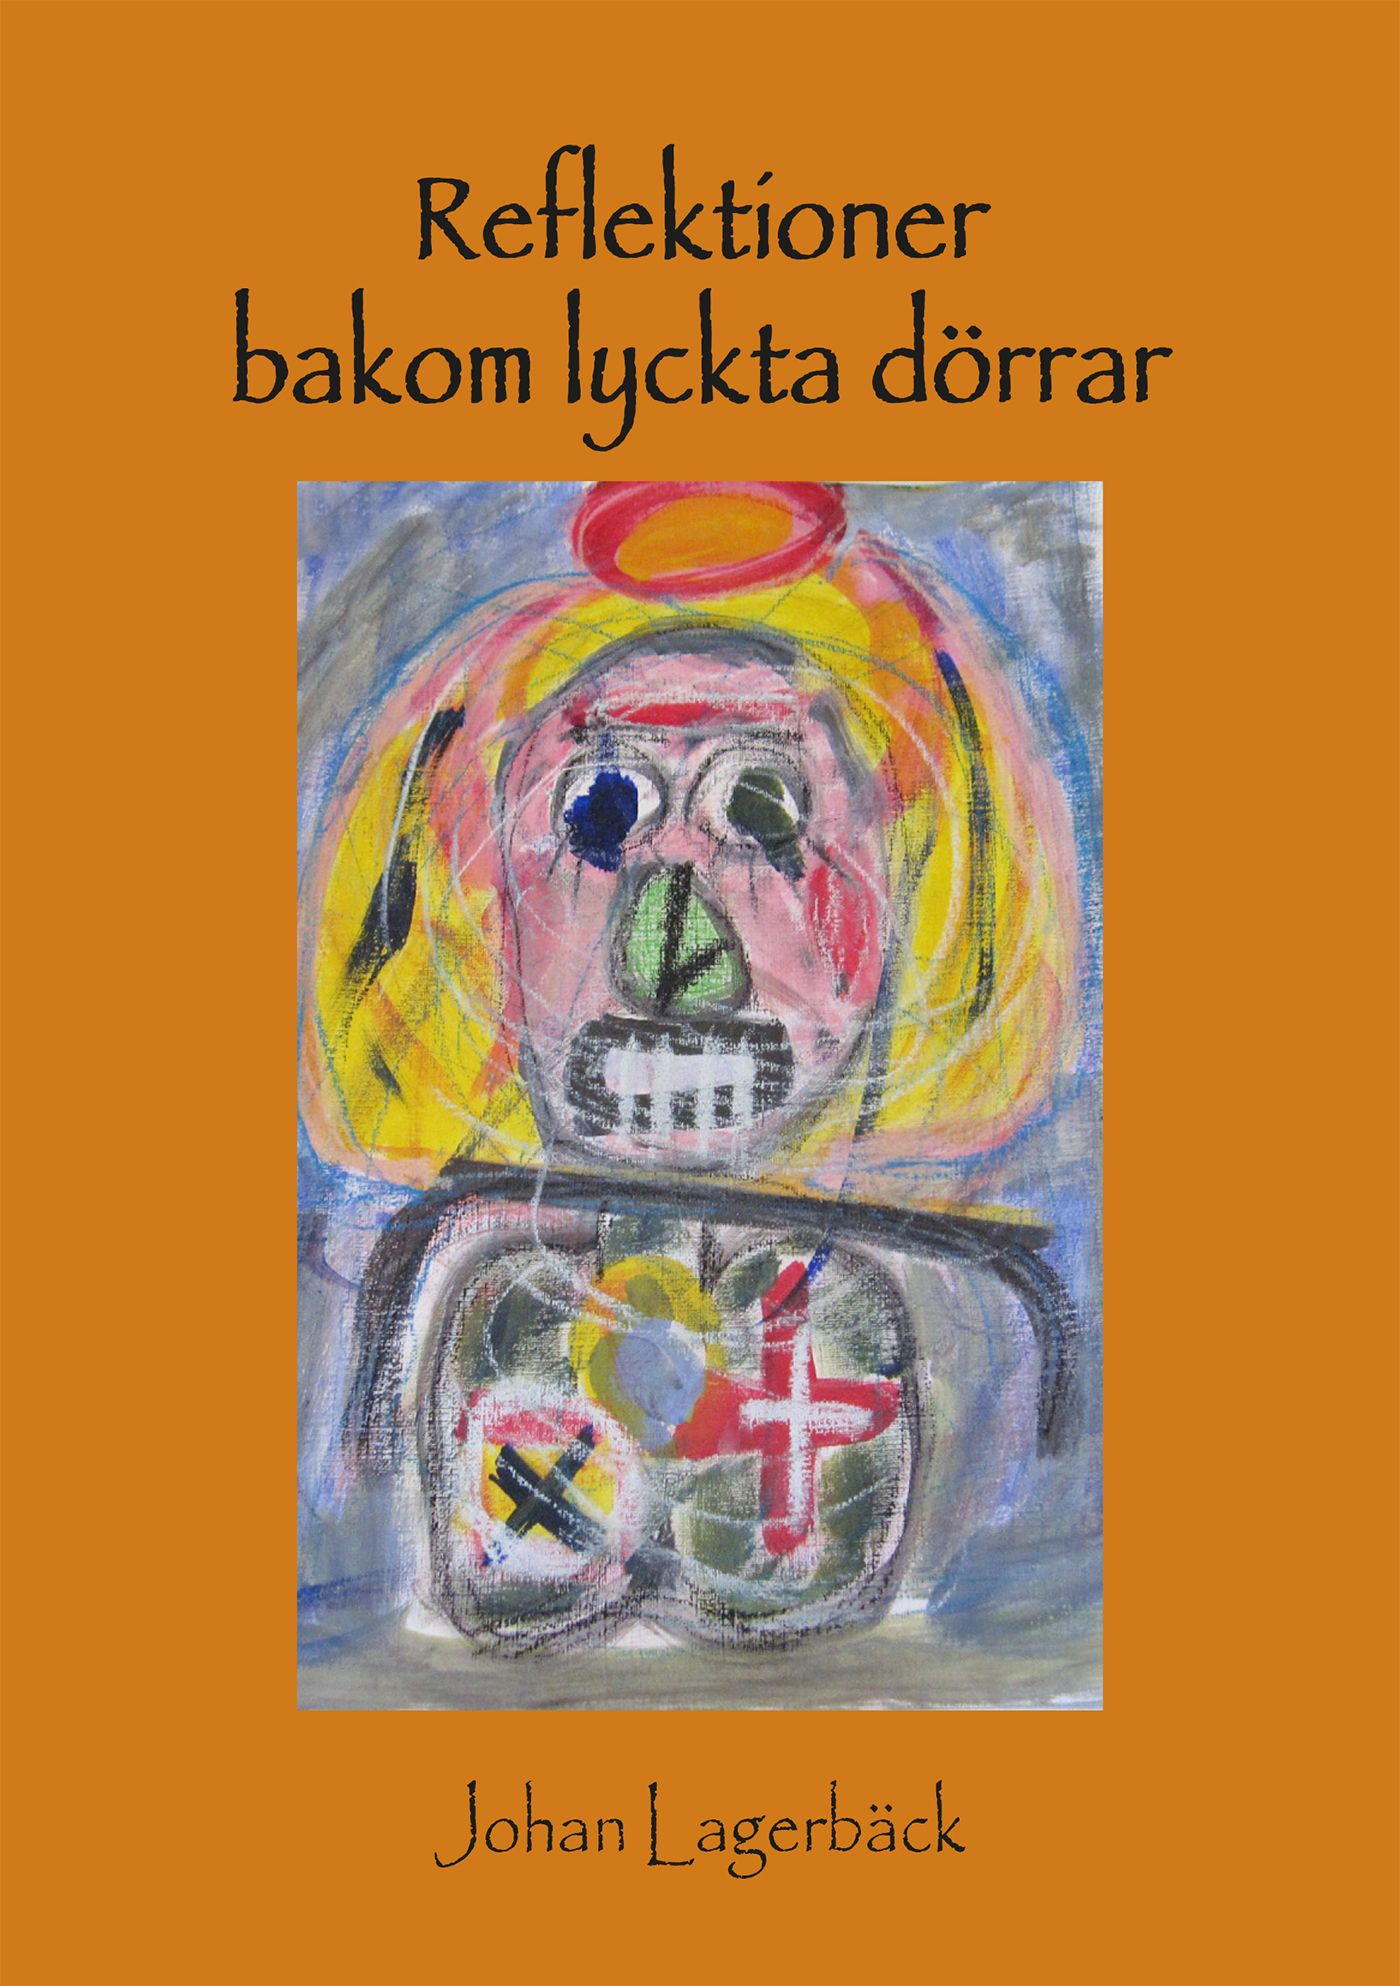 Reflektioner bakom lyckta dörrar, e-bog af Johan Lagerbäck